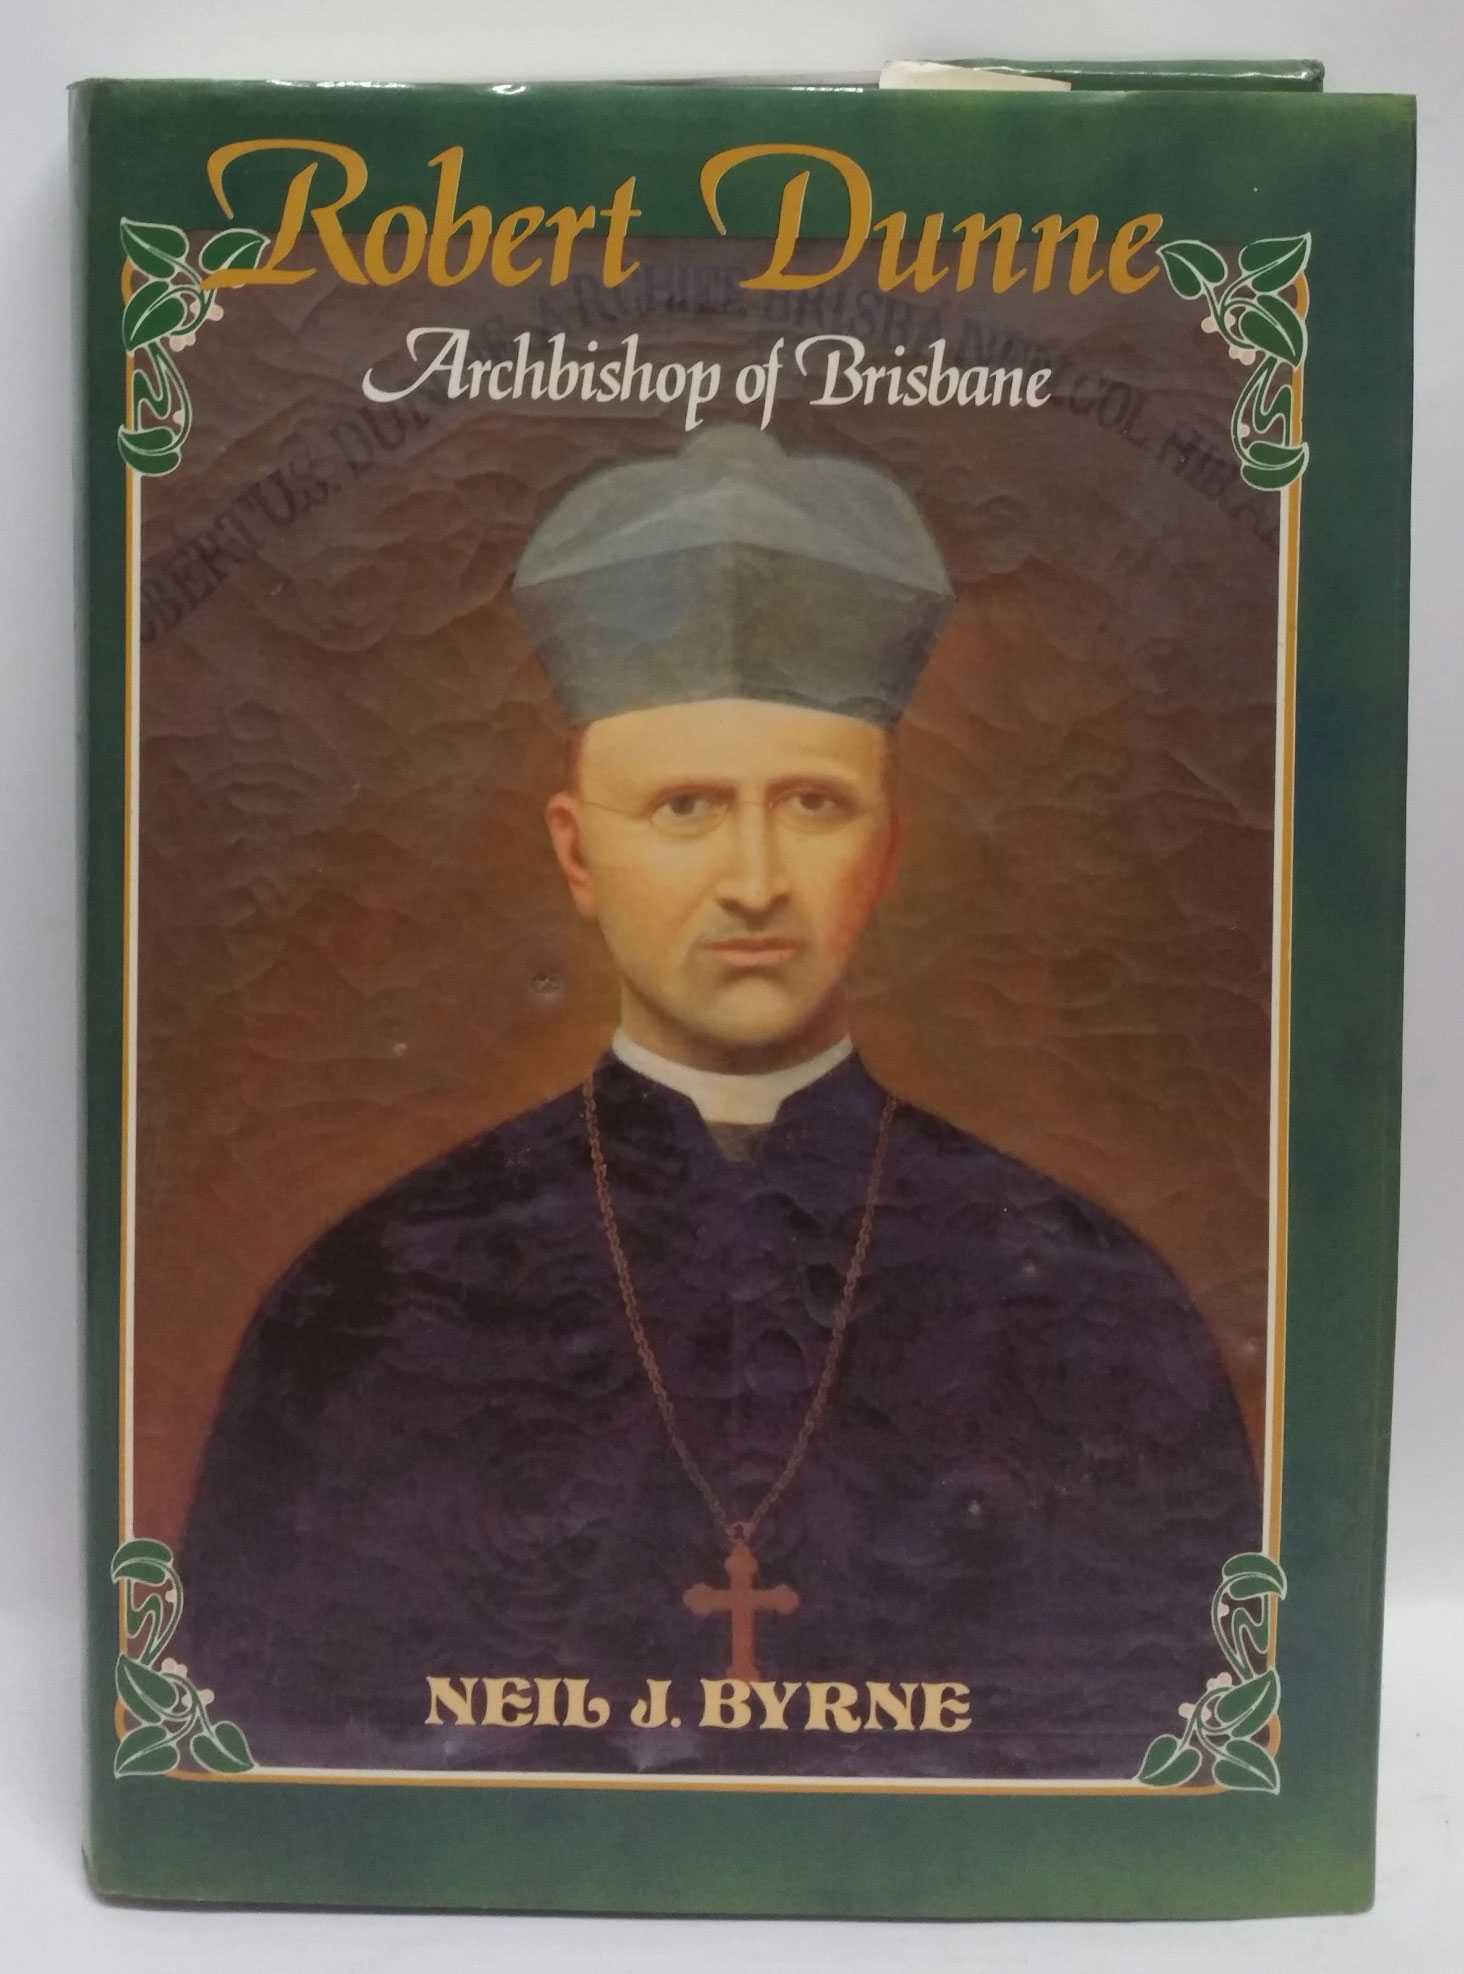 Neil J. Byrne - Robert Dunne: Archbishop of Brisbane